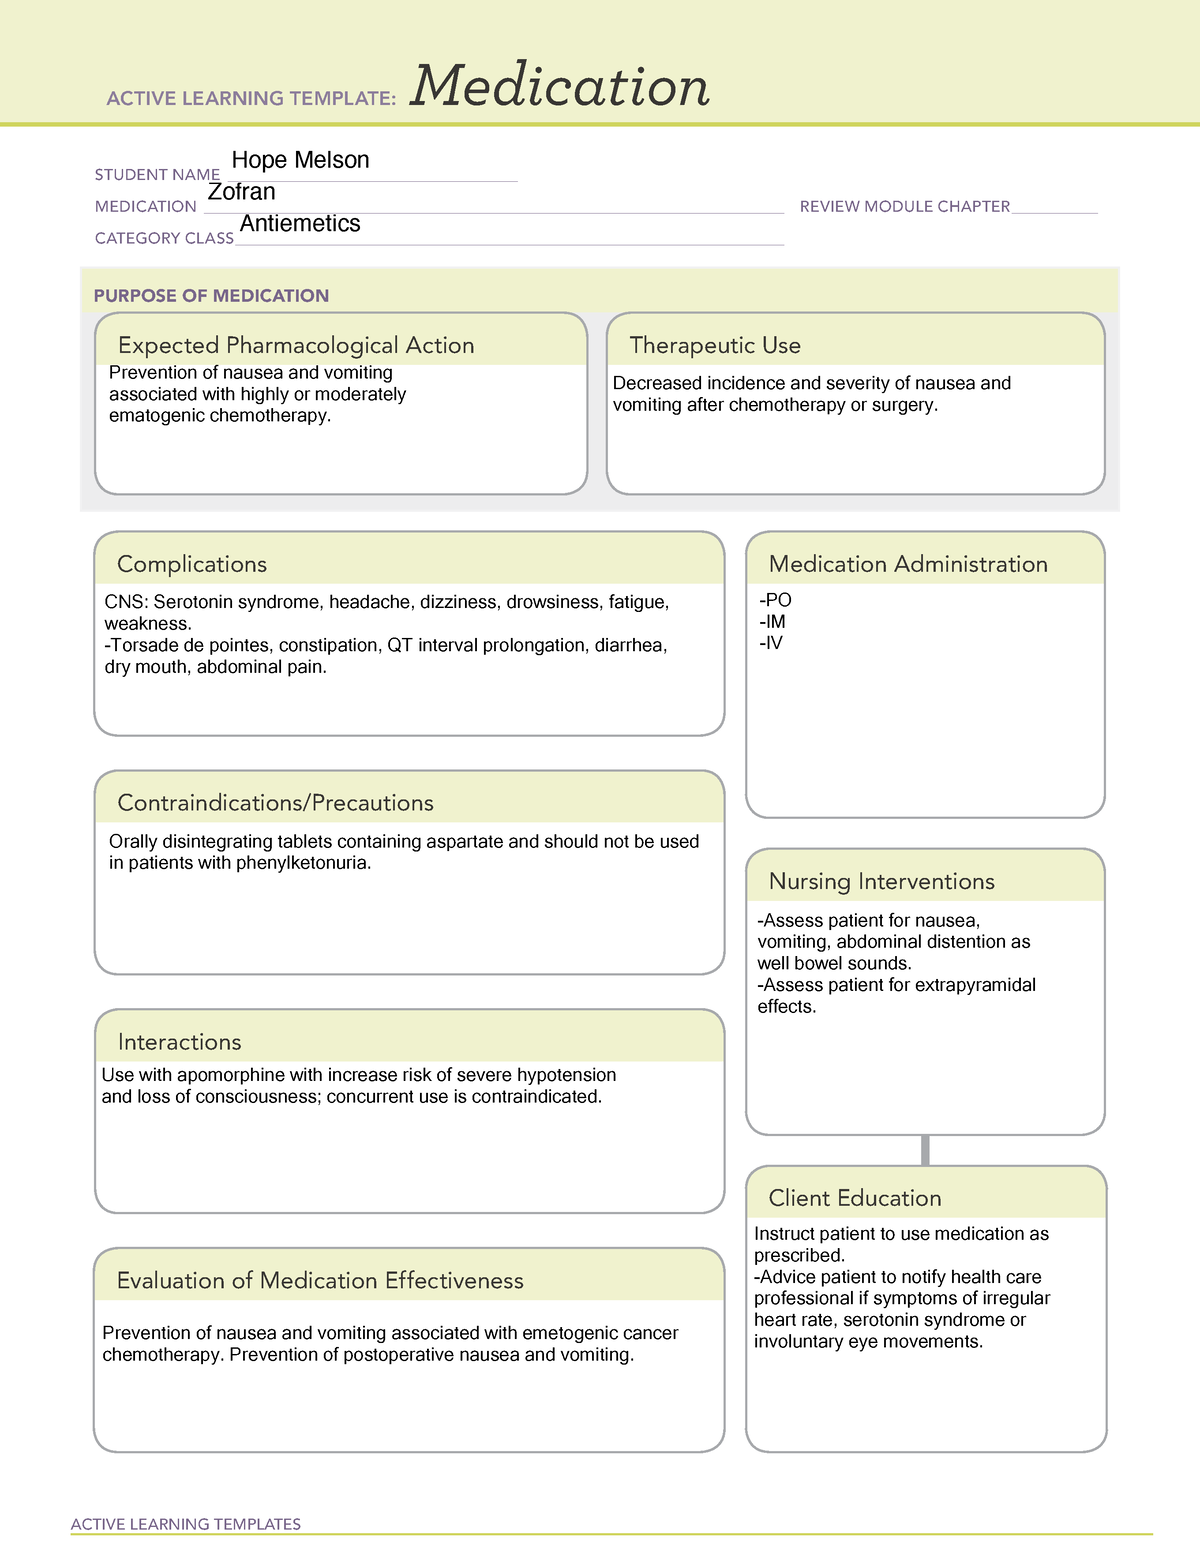 2022-ati-medication-template-zofran-active-learning-templates